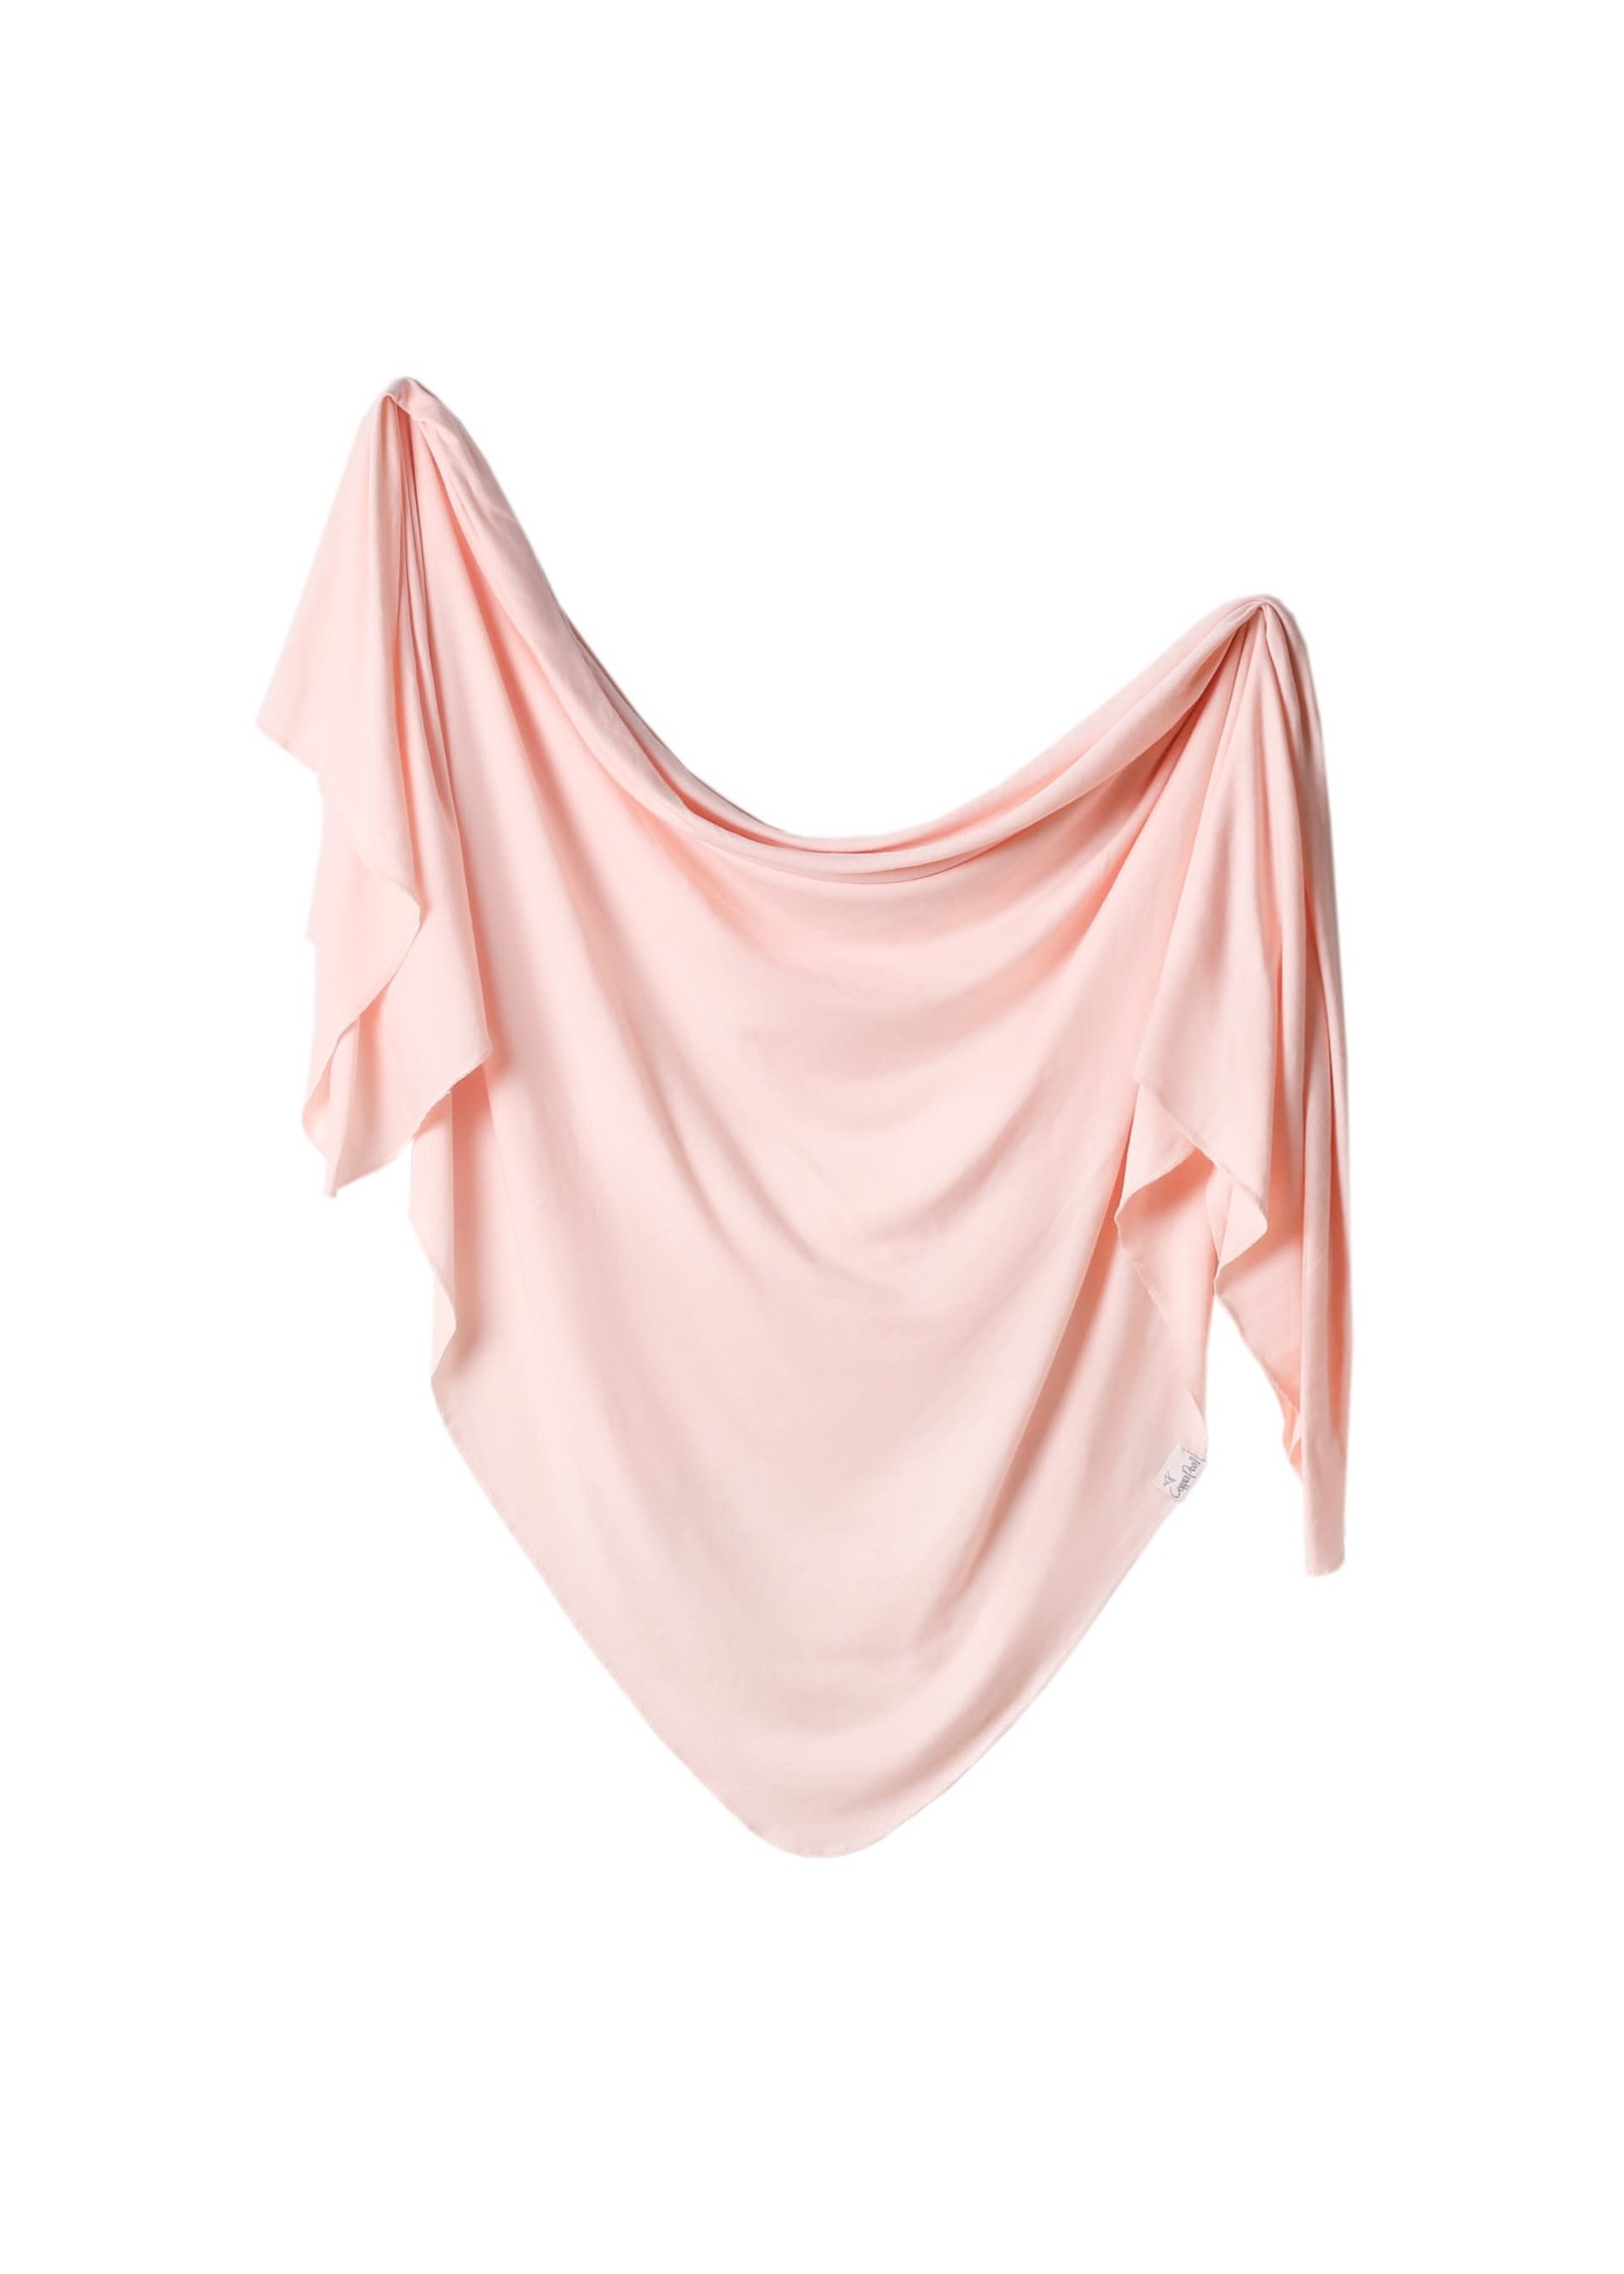 Copper Pearl Knit Blanket - Blush